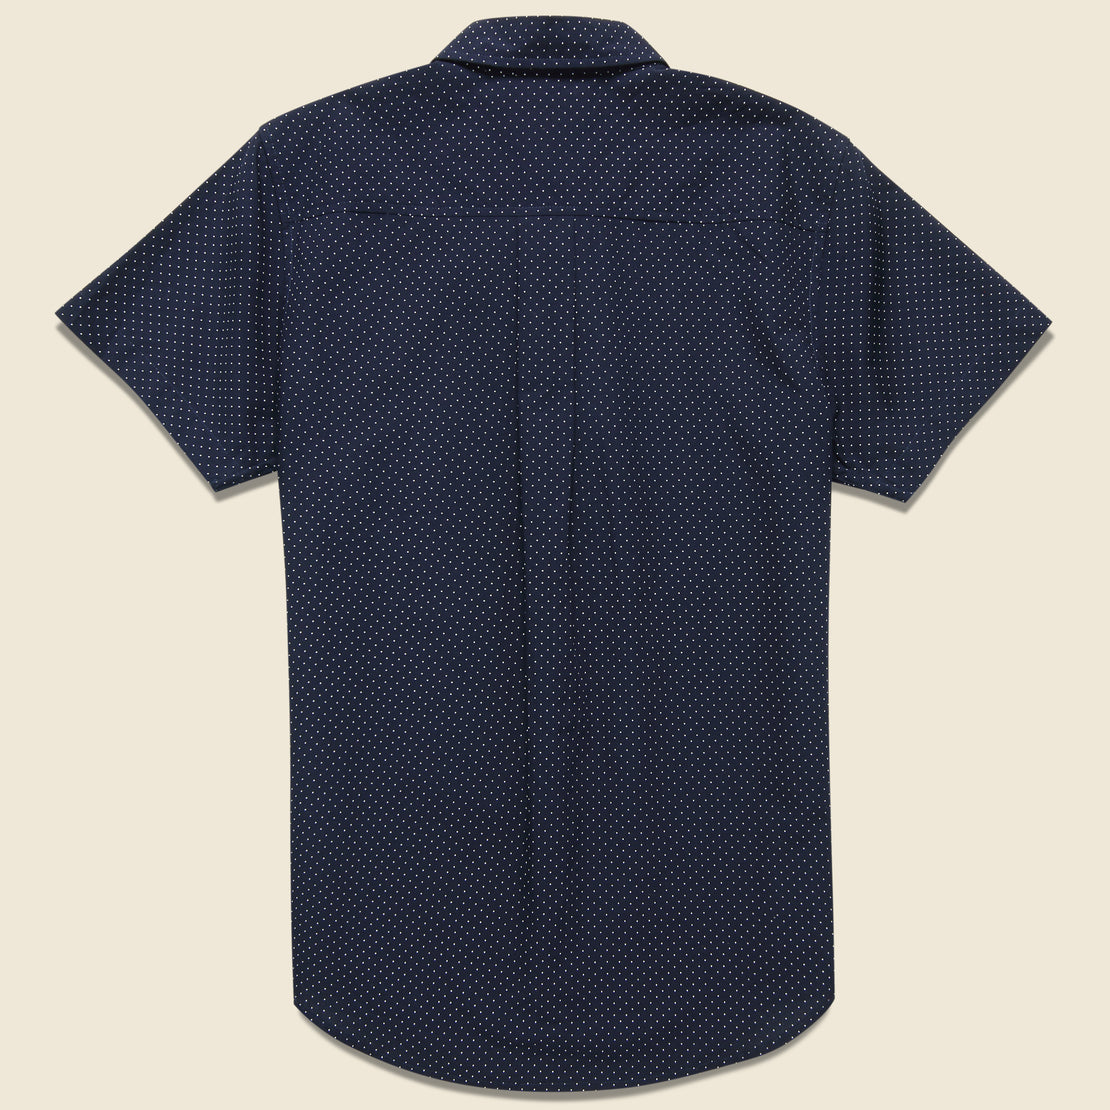 Marten Shirt - Navy Polkadot - Bridge & Burn - STAG Provisions - Tops - S/S Woven - Dot